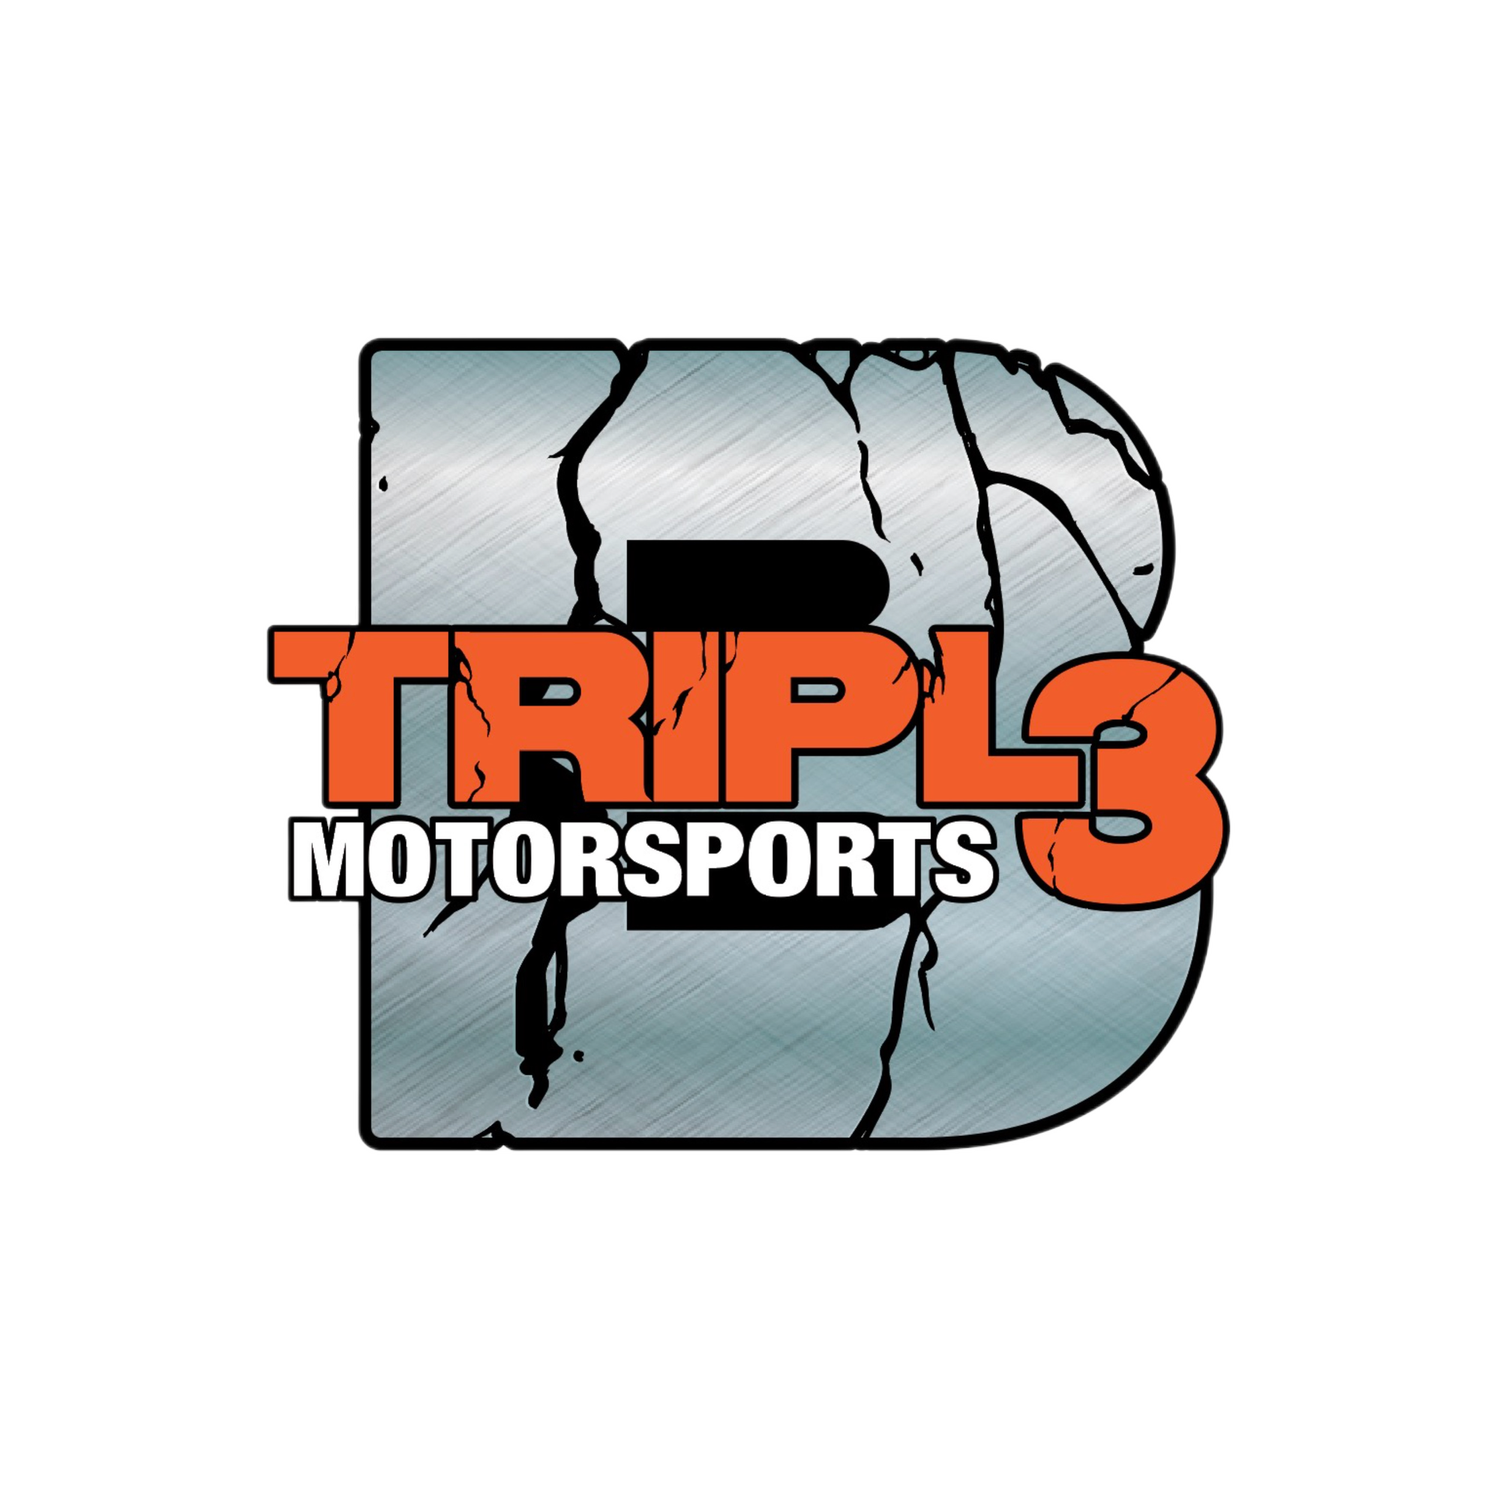 Triple B Motorsports